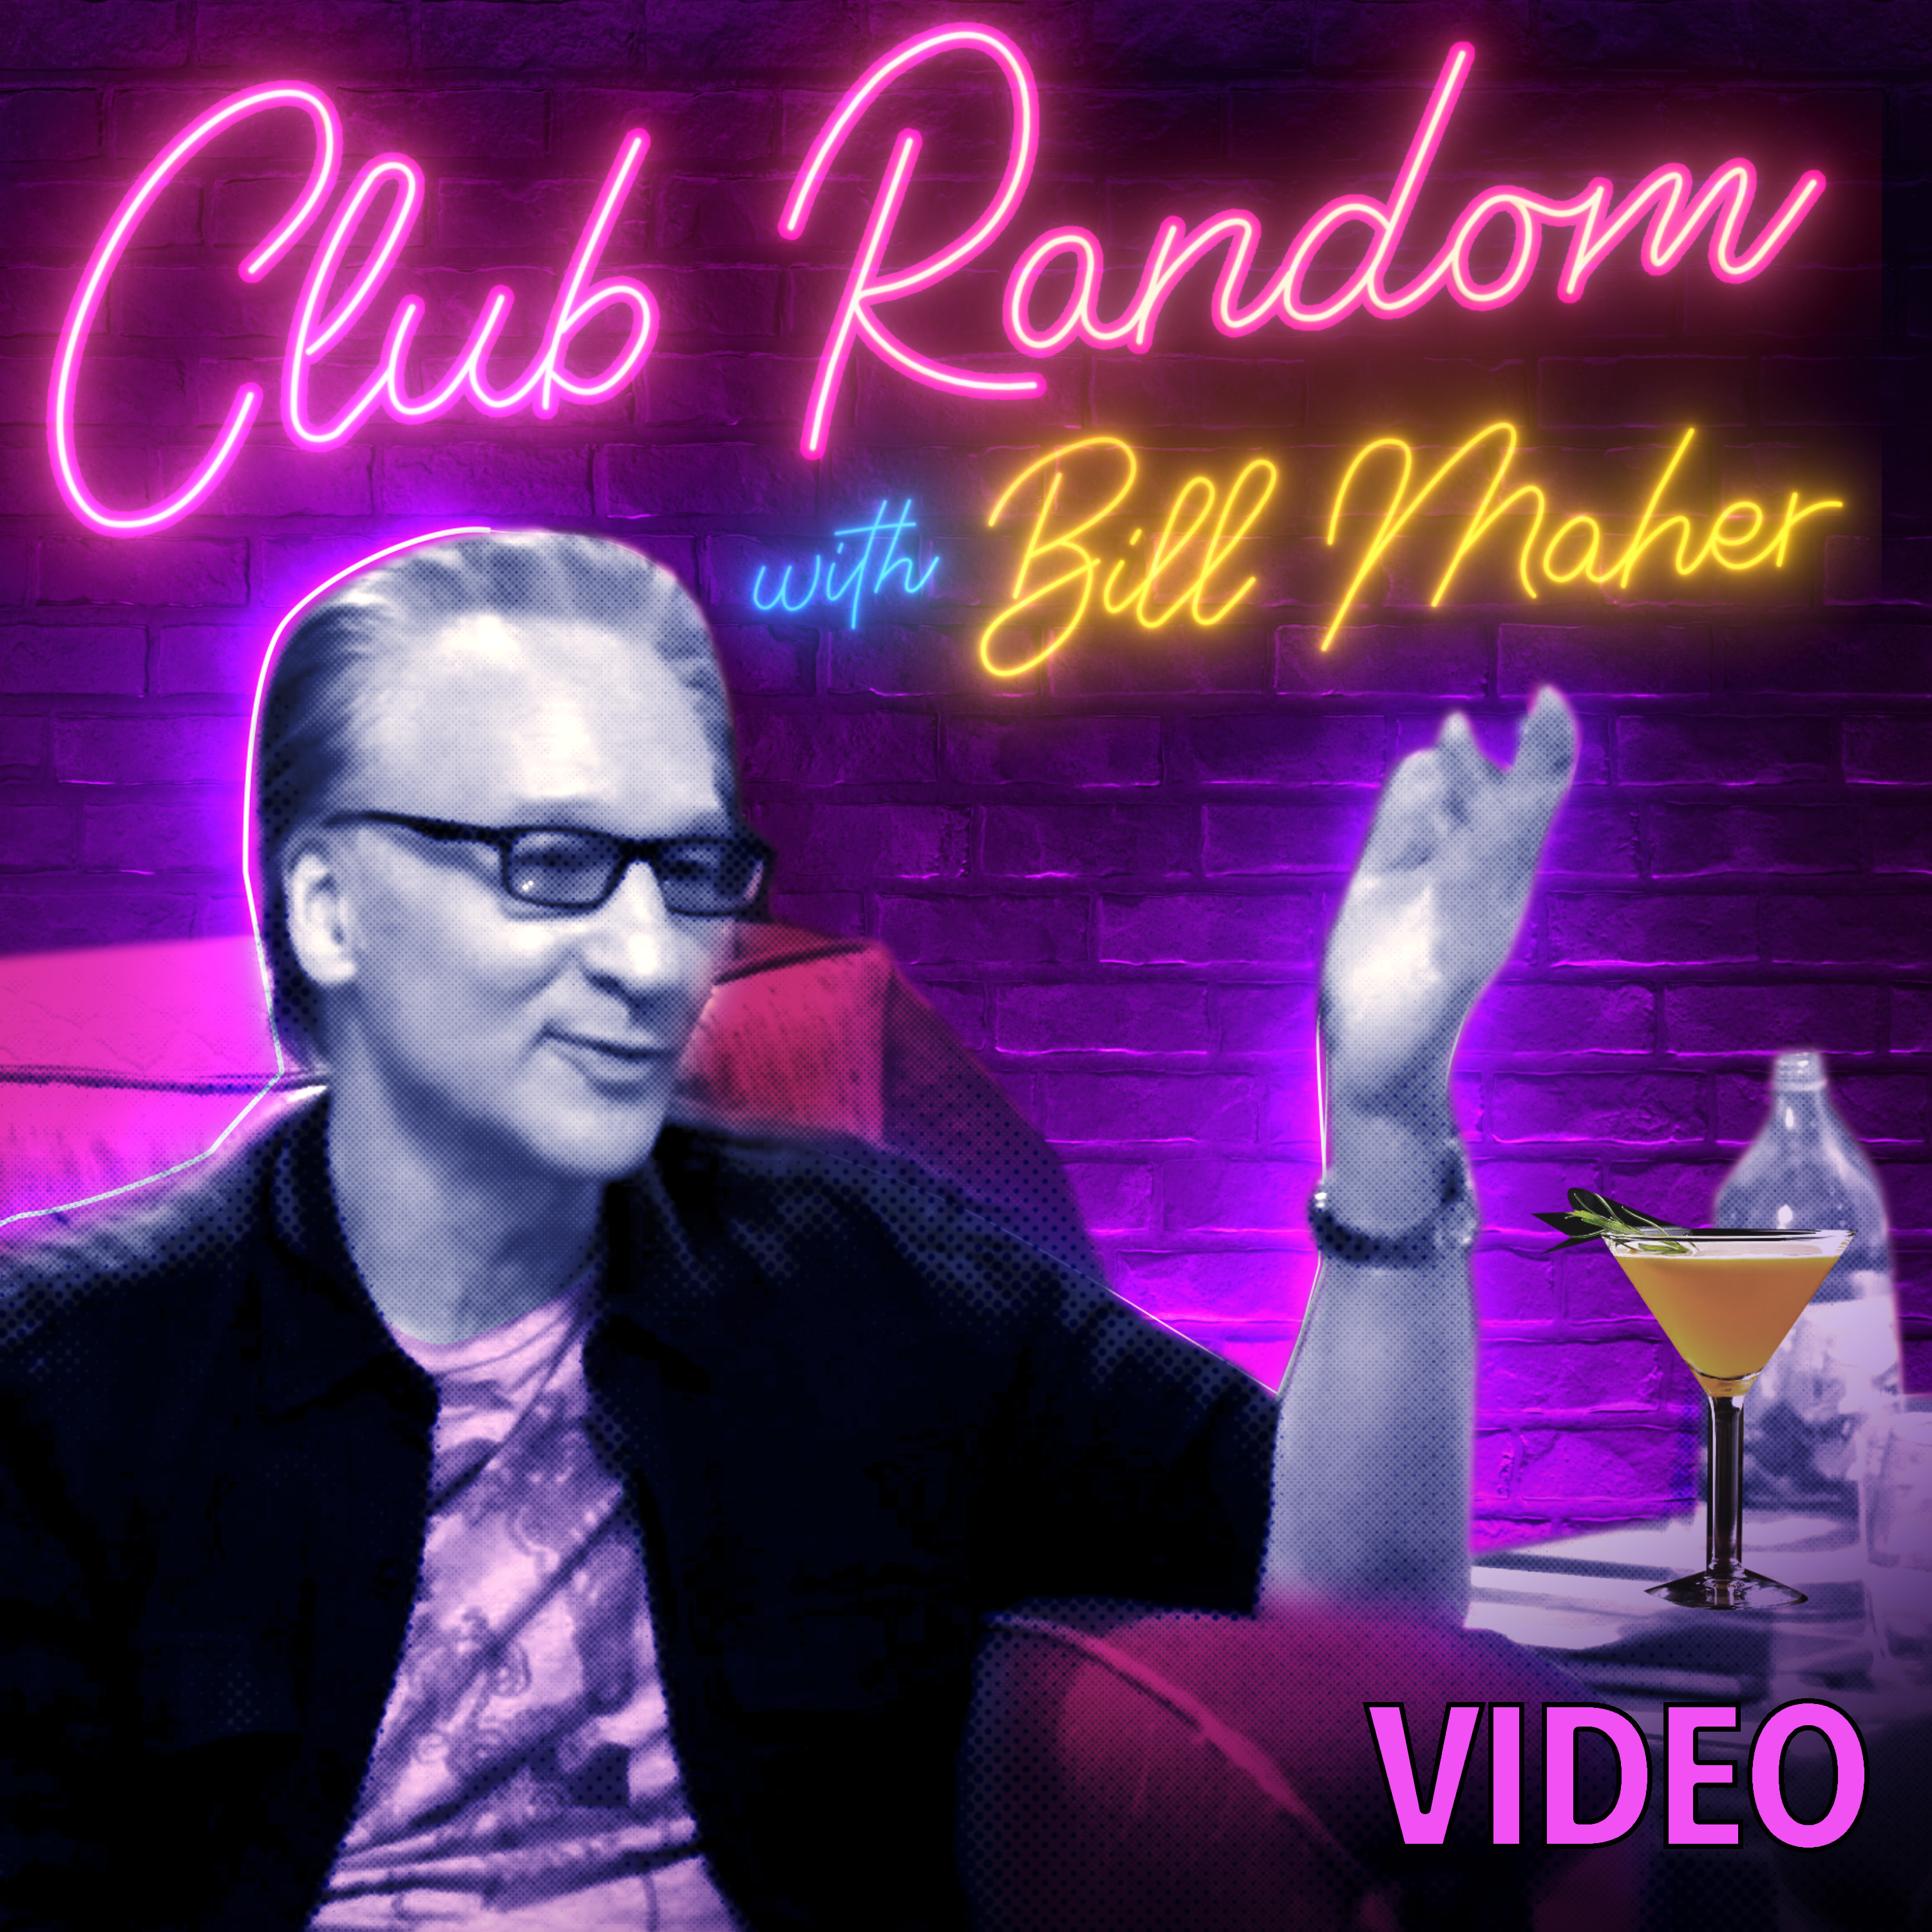 Video: John Mellencamp | Club Random with Bill Maher